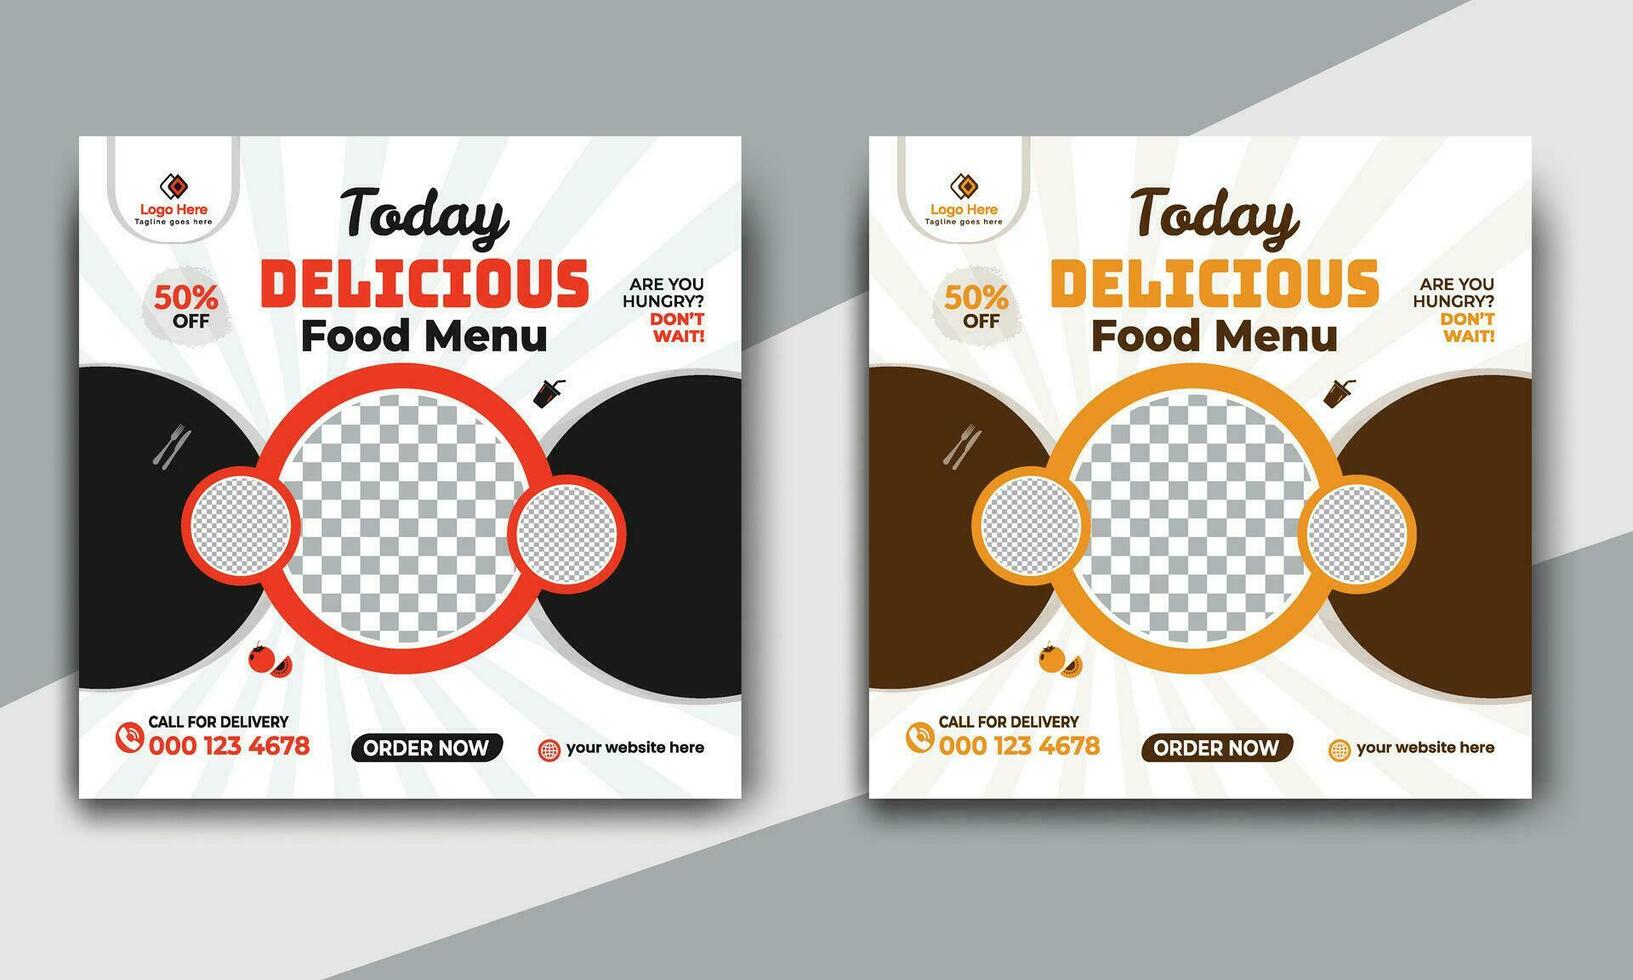 rápido comida restaurante negocio márketing social medios de comunicación enviar o web bandera modelo diseño con resumen antecedentes. Fresco pizza, hamburguesa y en línea rebaja promoción volantes vector